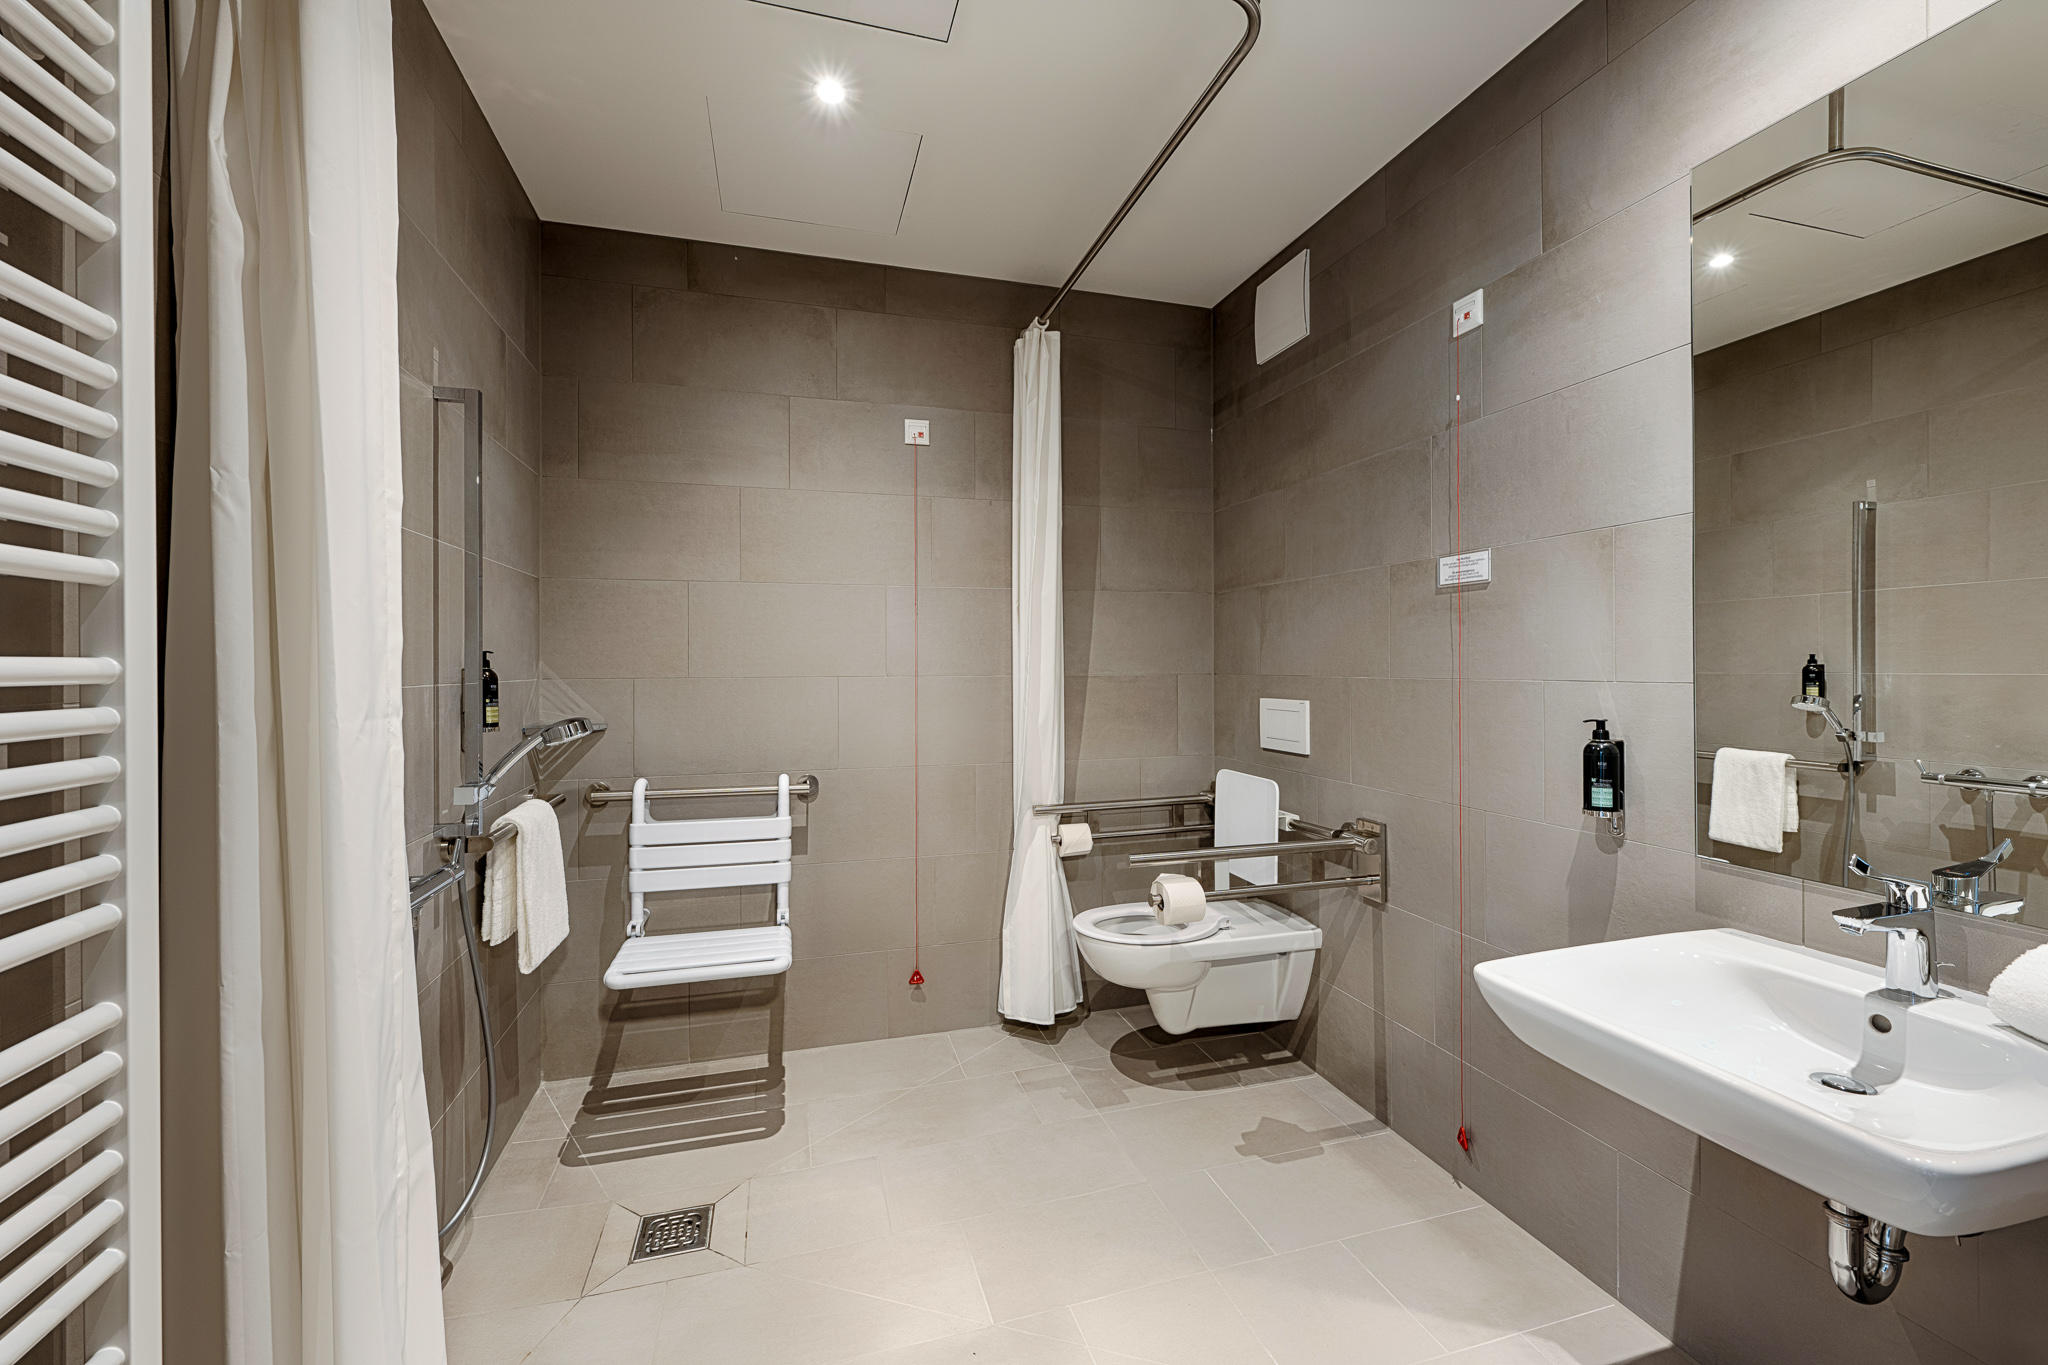 Premier Inn Wolfsburg City Centre hotel accessible wet room with walk in shower